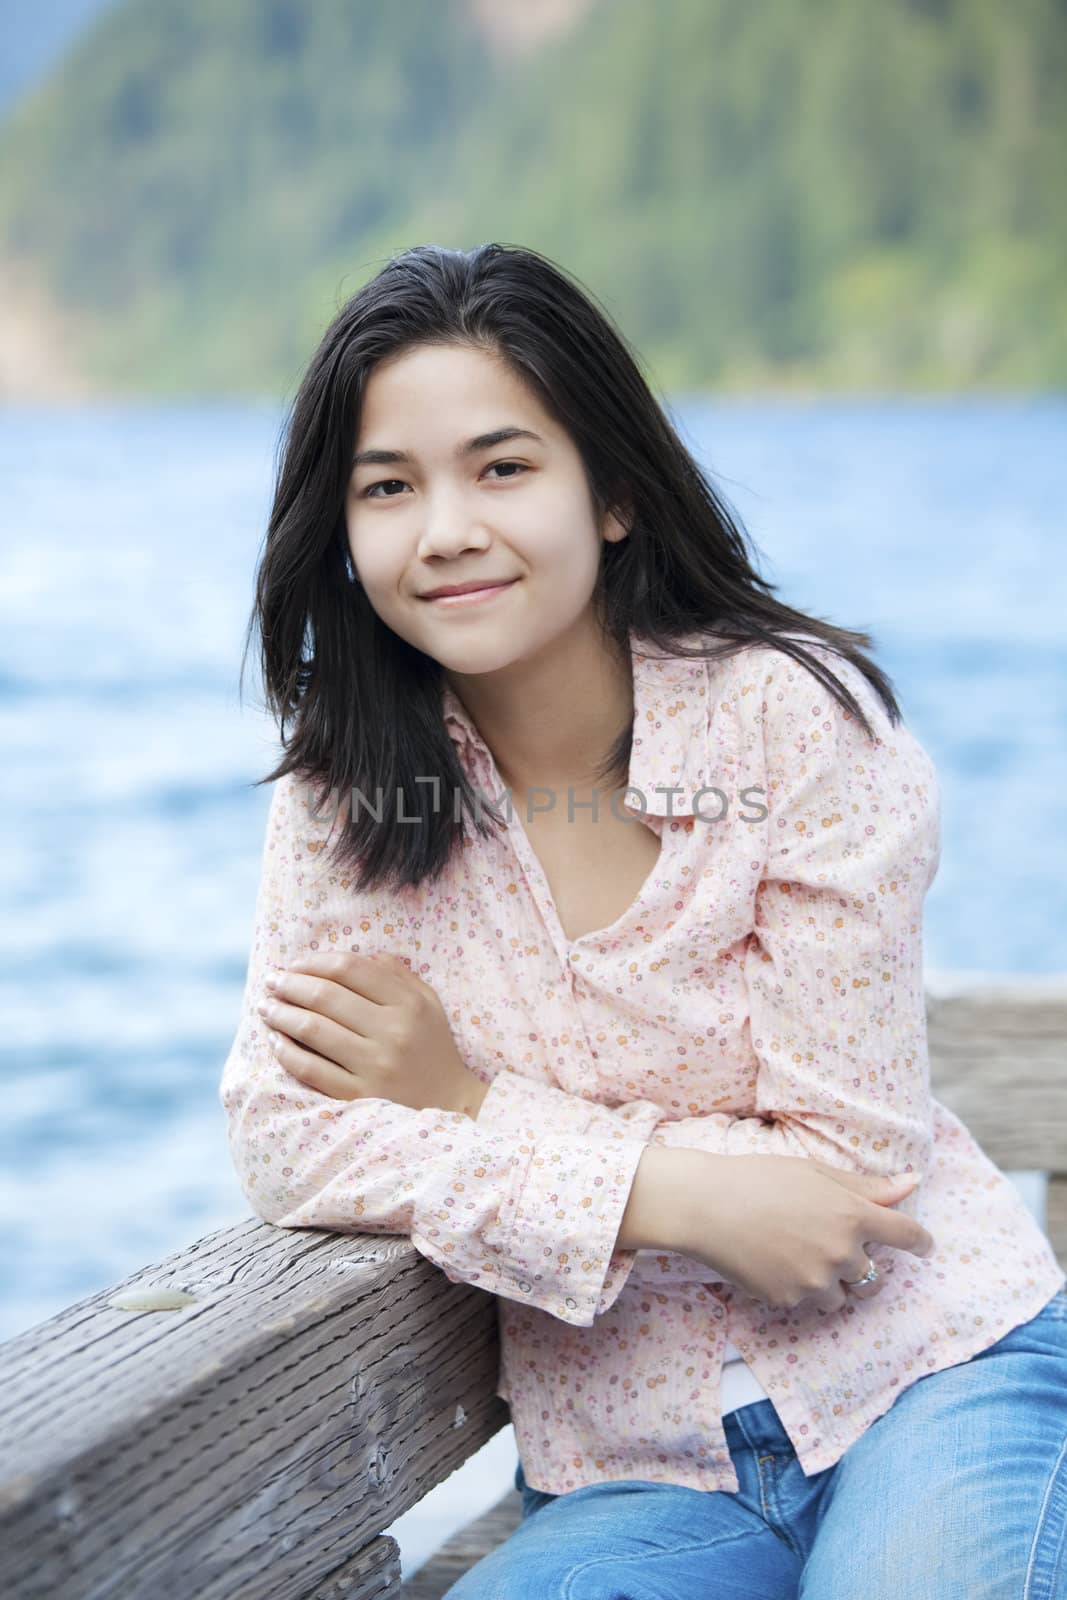 Young biracial teen girl sitting quietly on lake pier, relaxing